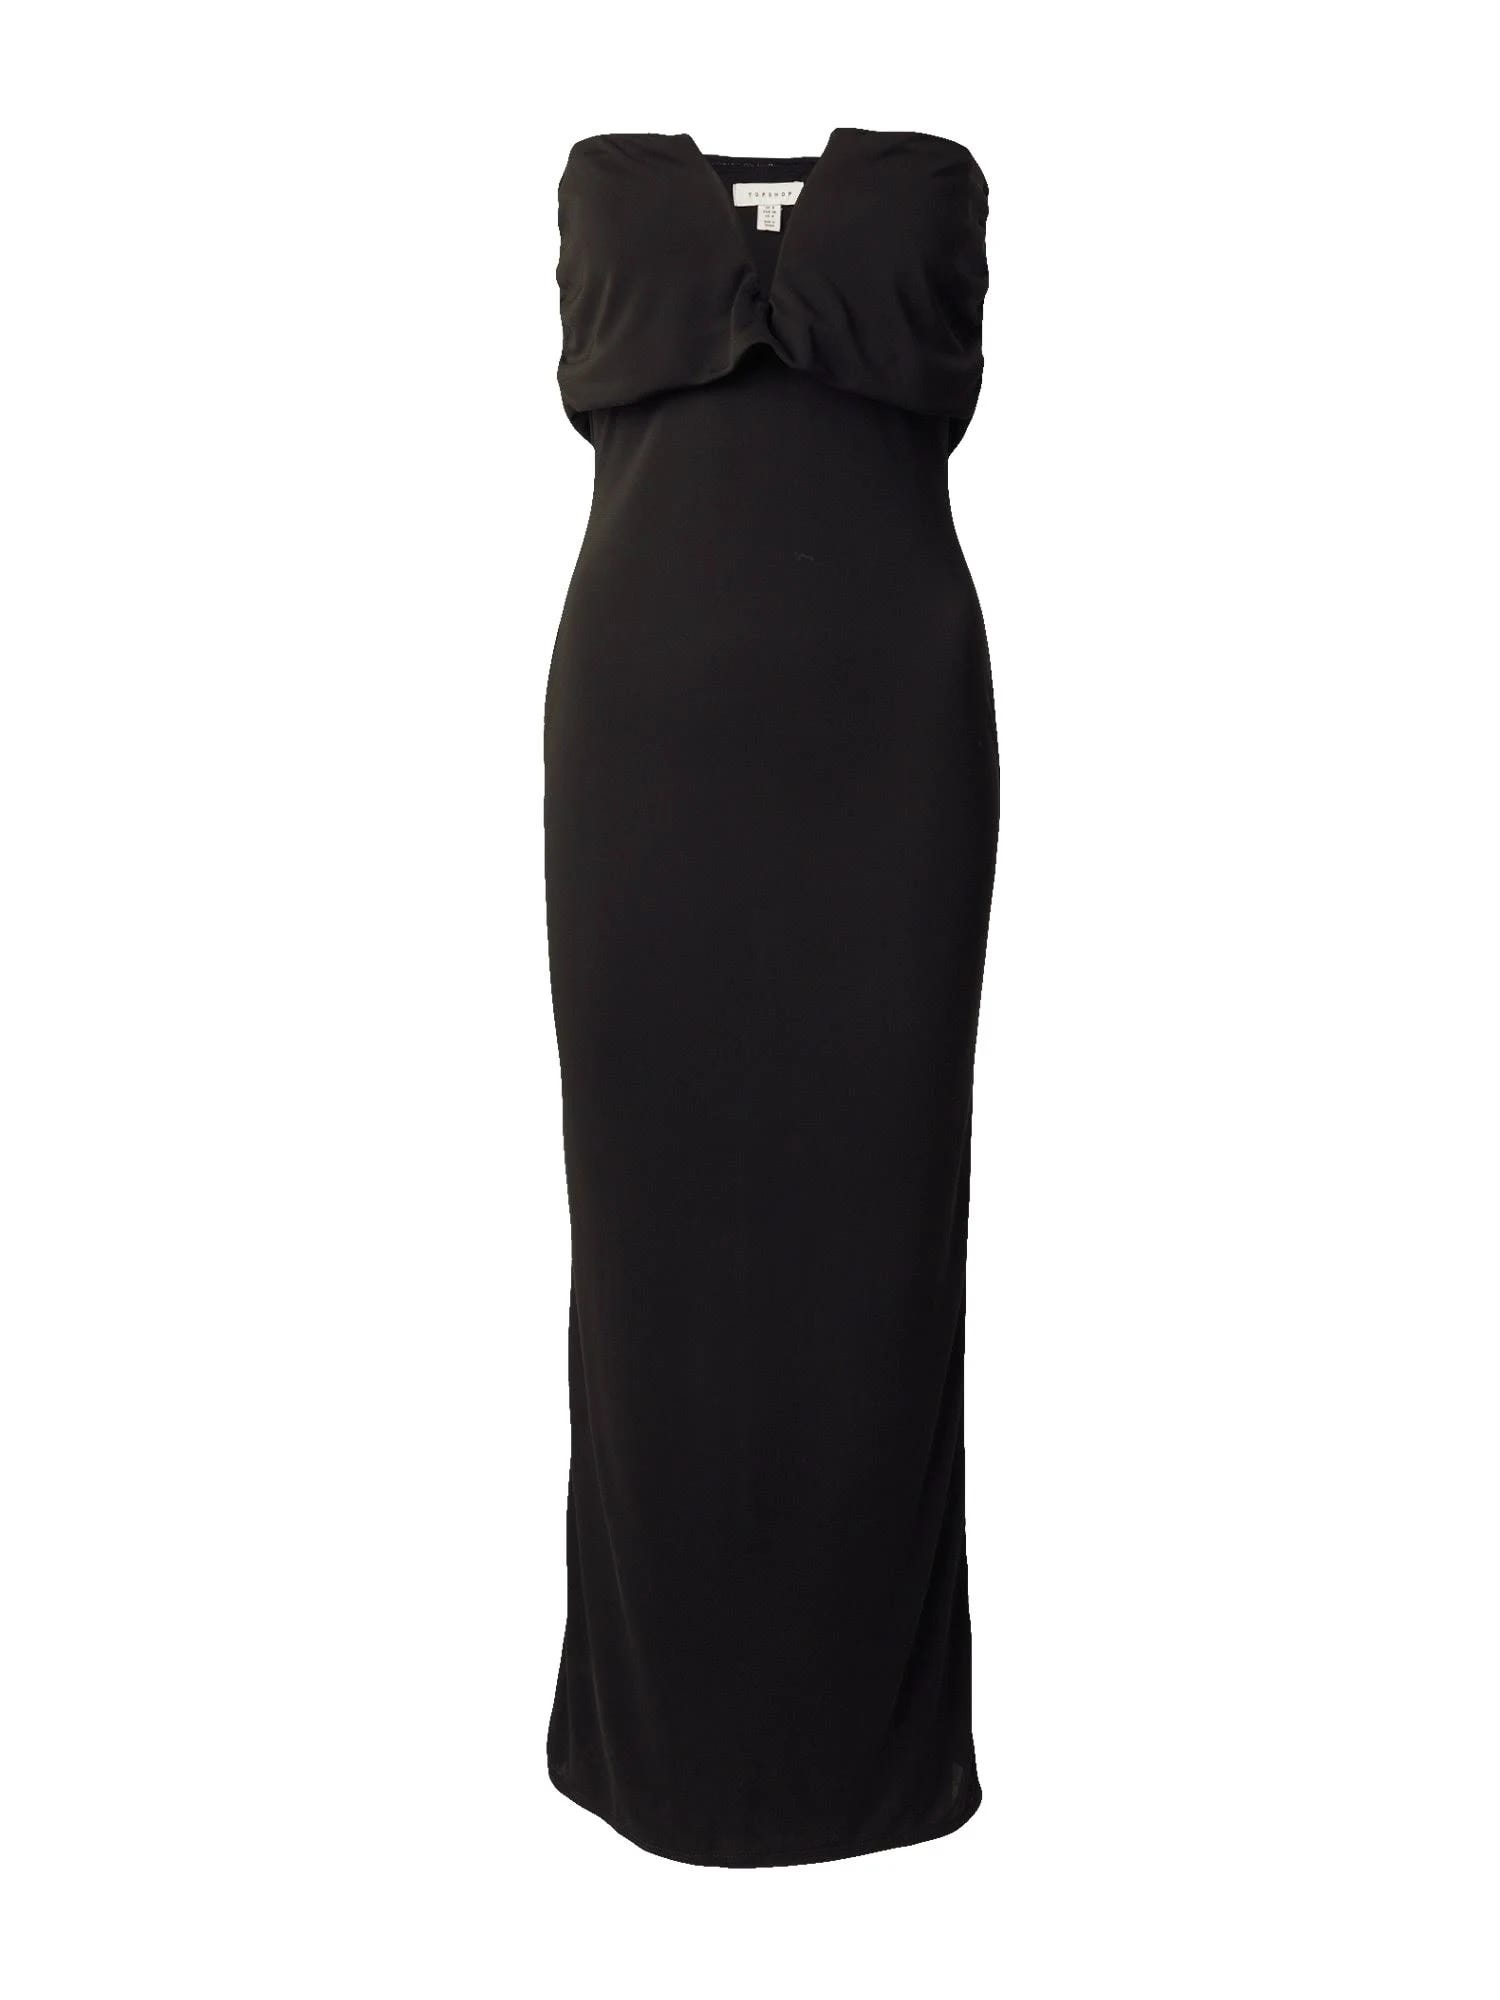 Sleek Off-Shoulder Black Midi Dress for Women - Soft and Stretchy Jersey | Image